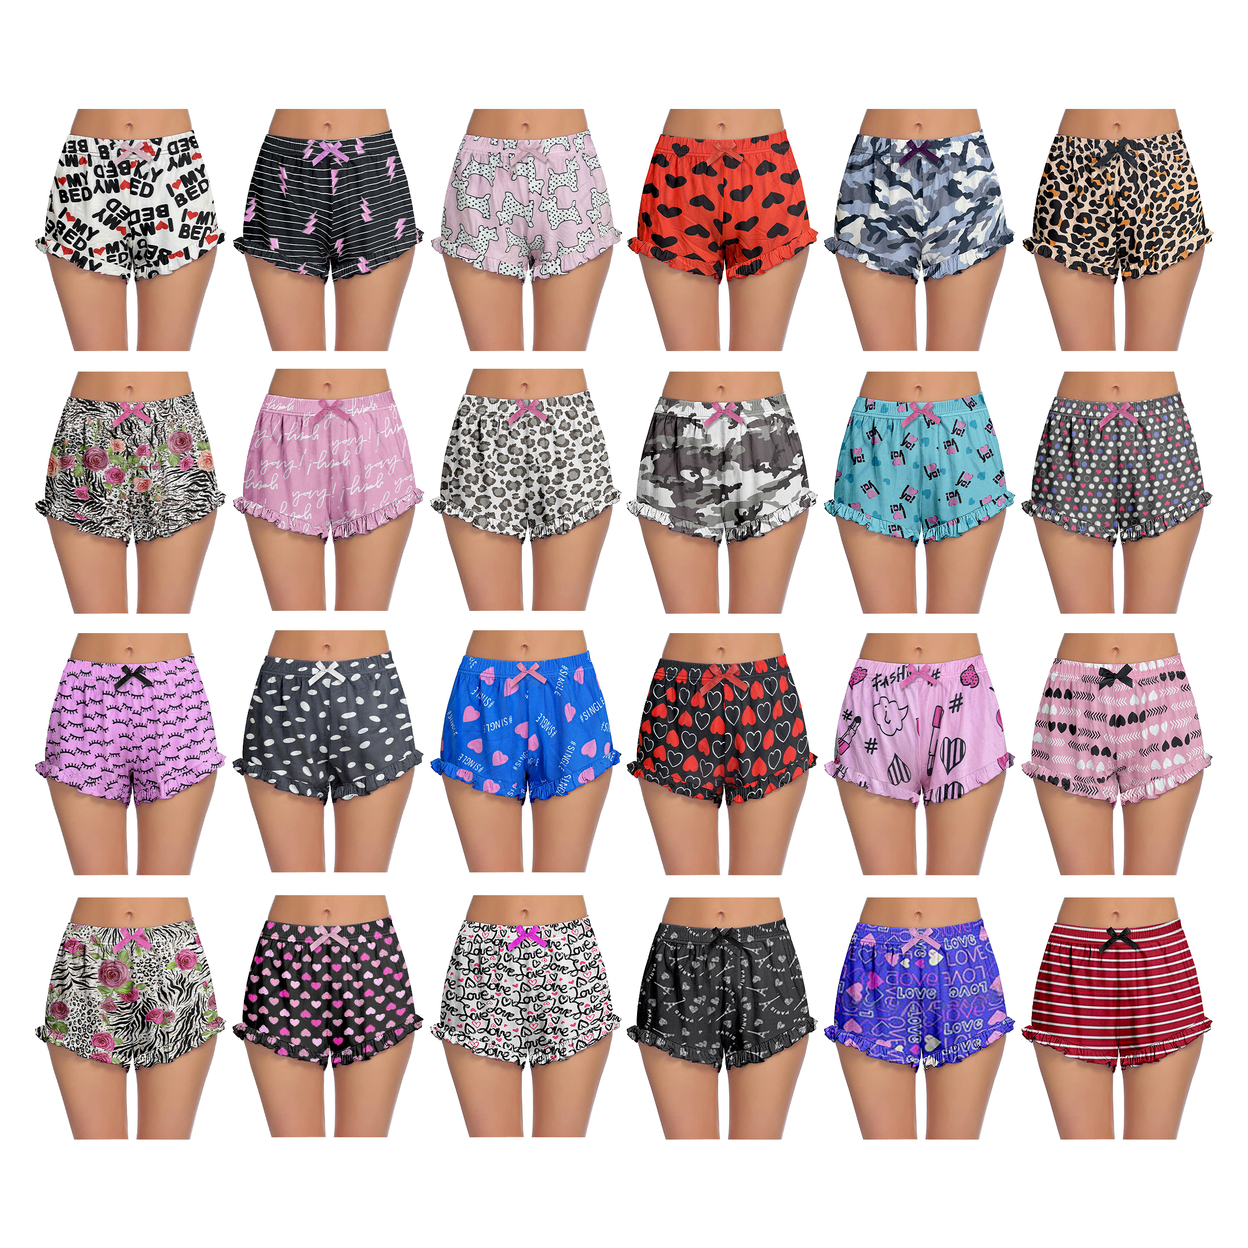 2-Pack: Women's Ultra-Soft Cozy Fun Print Ruffled Hem Sleep Lounge Pajama Shorts - Small, Shapes